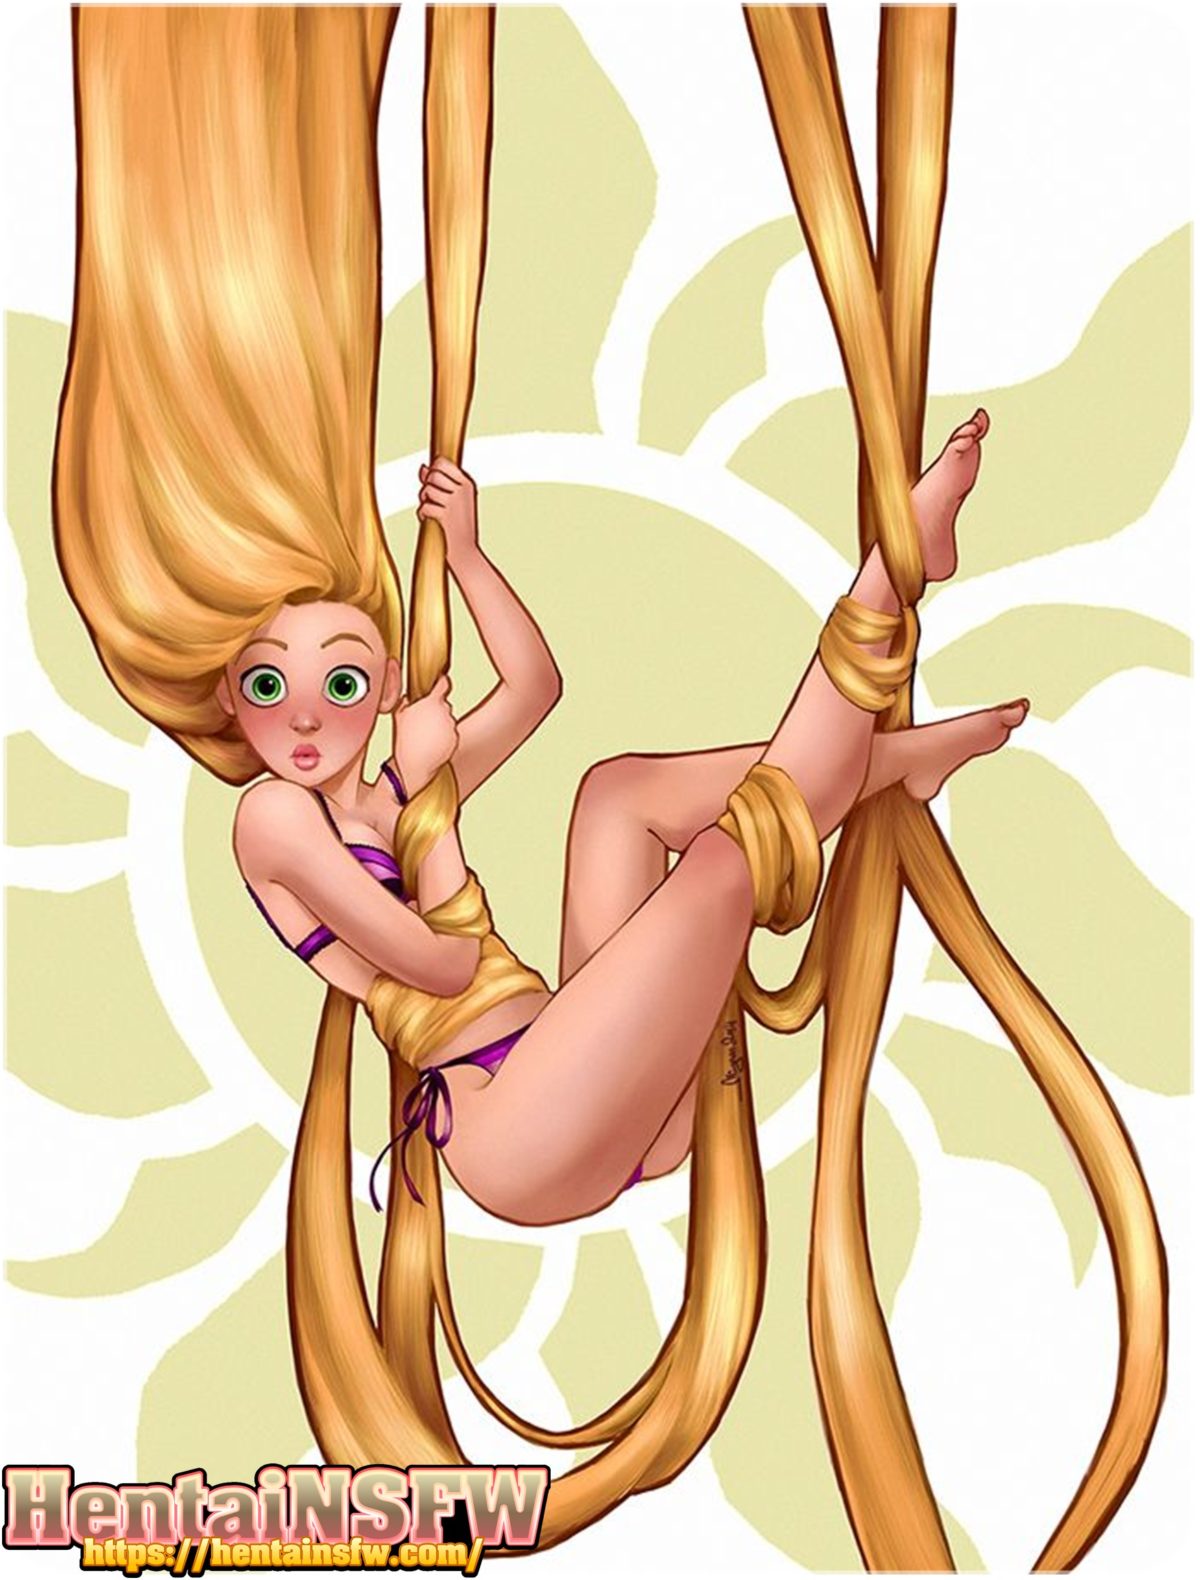 sfw full color lolicon hentai walt disney cartoon porn art of princess rapunzel in a tangled illustration